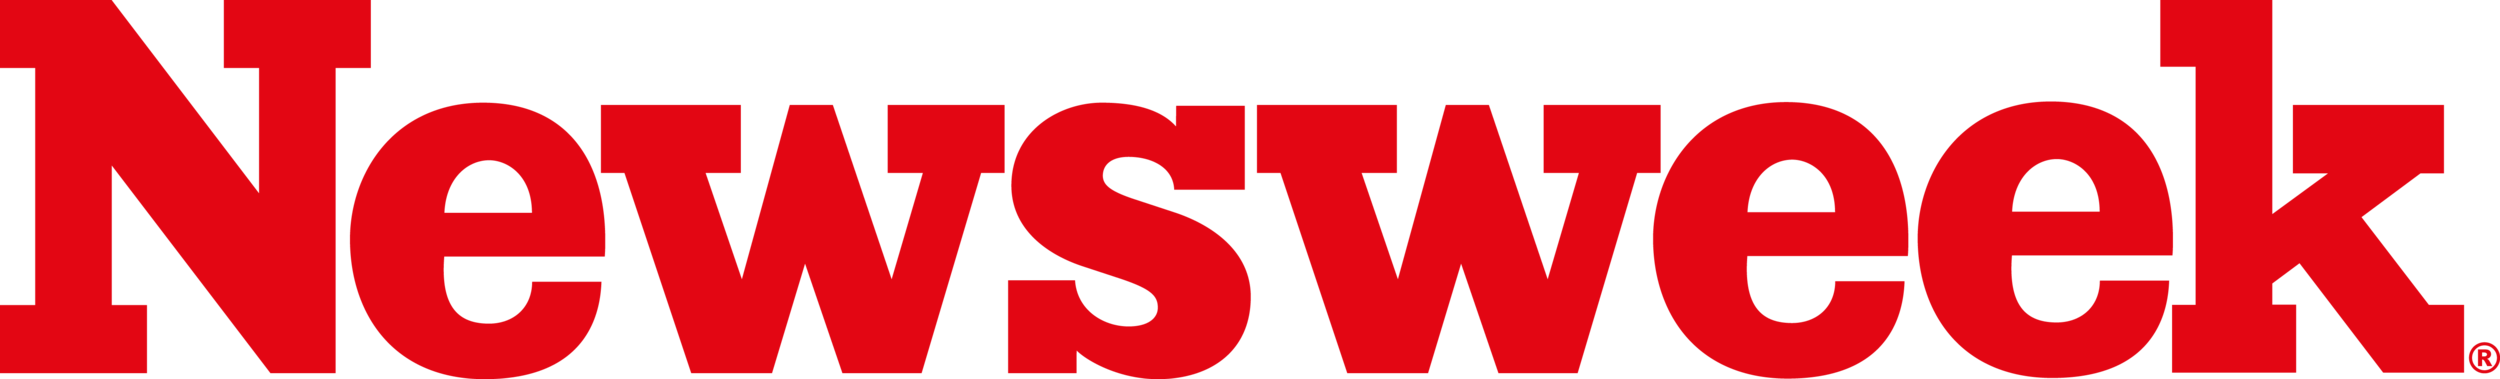 Newsweek-logo.png